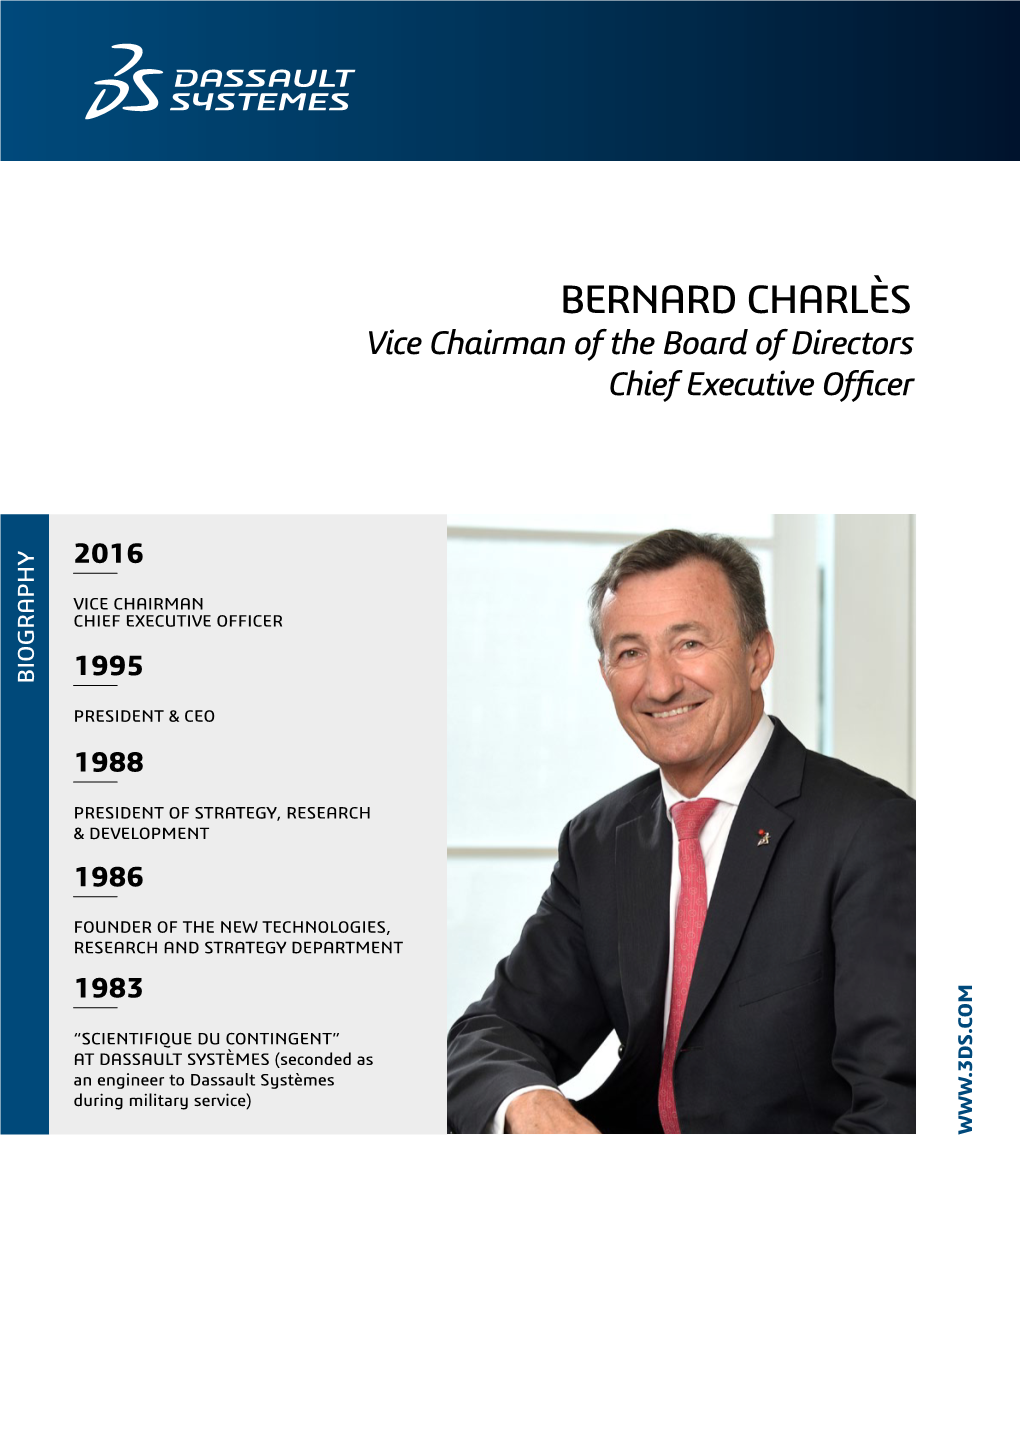 BERNARD CHARLÈS BERNARD Chief Executive Officer Executive Chief